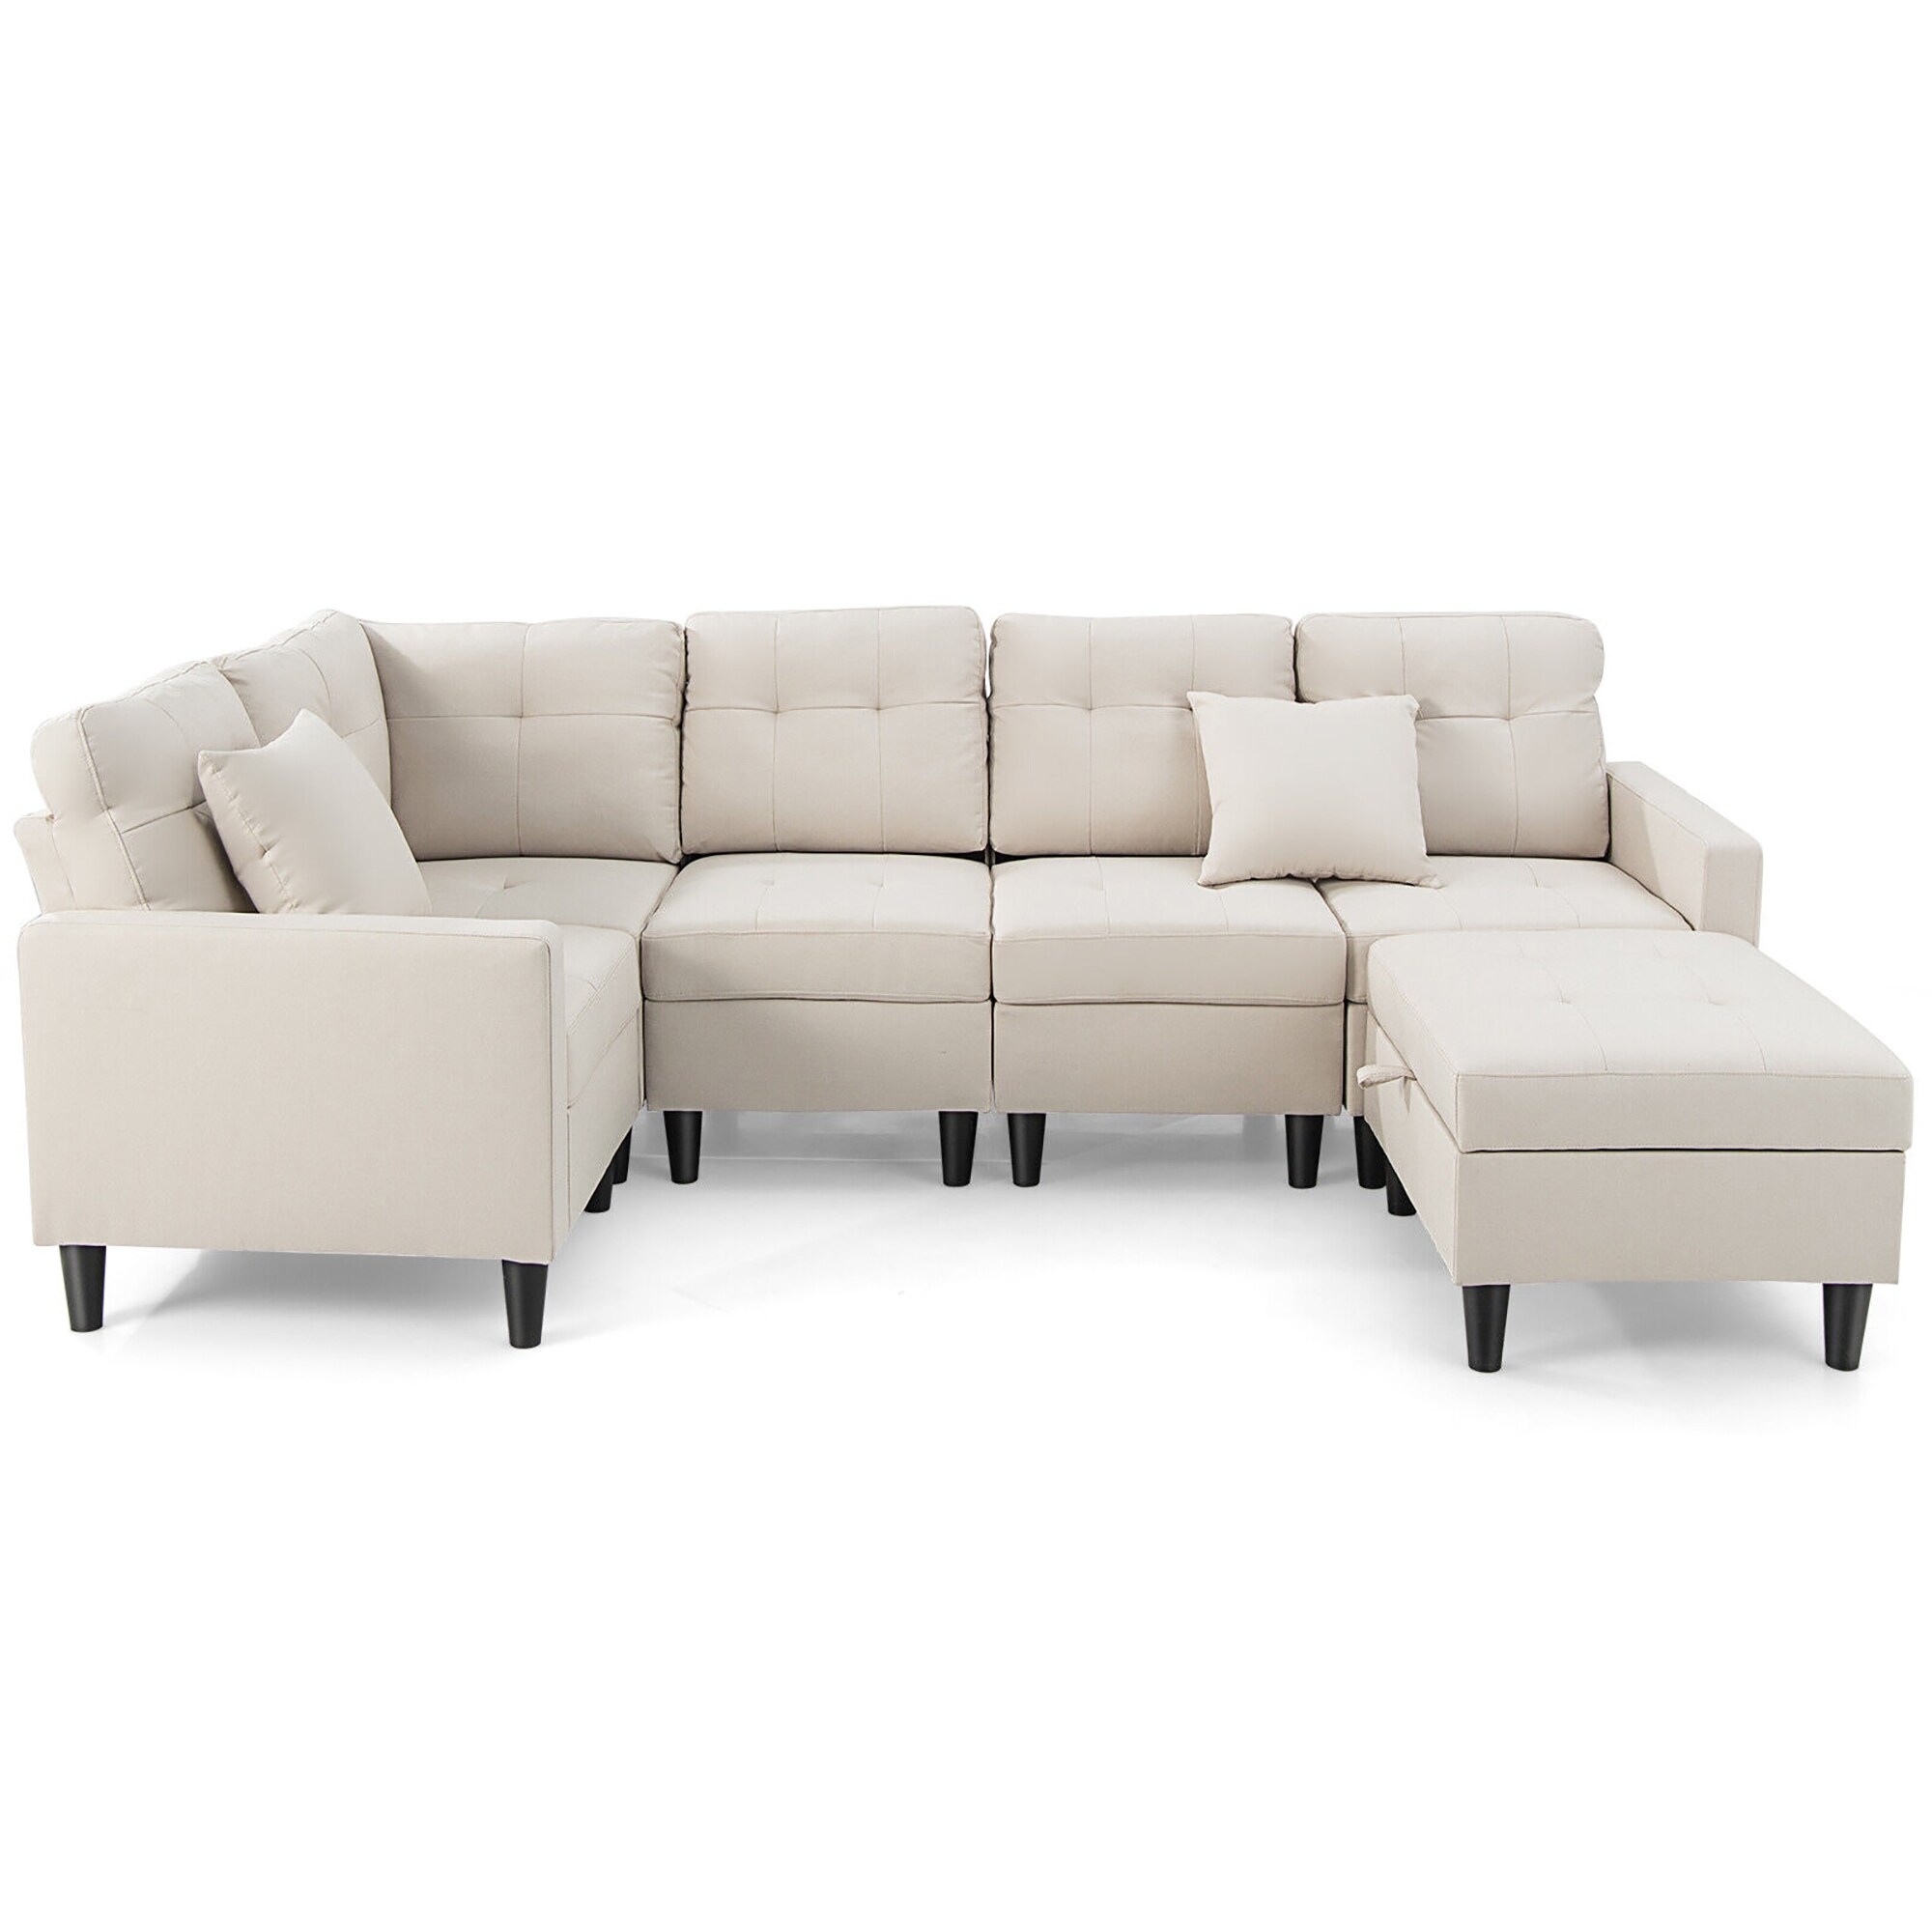 Gymax L-shaped Sectional Corner Sofa Set Living Room Furniture w/